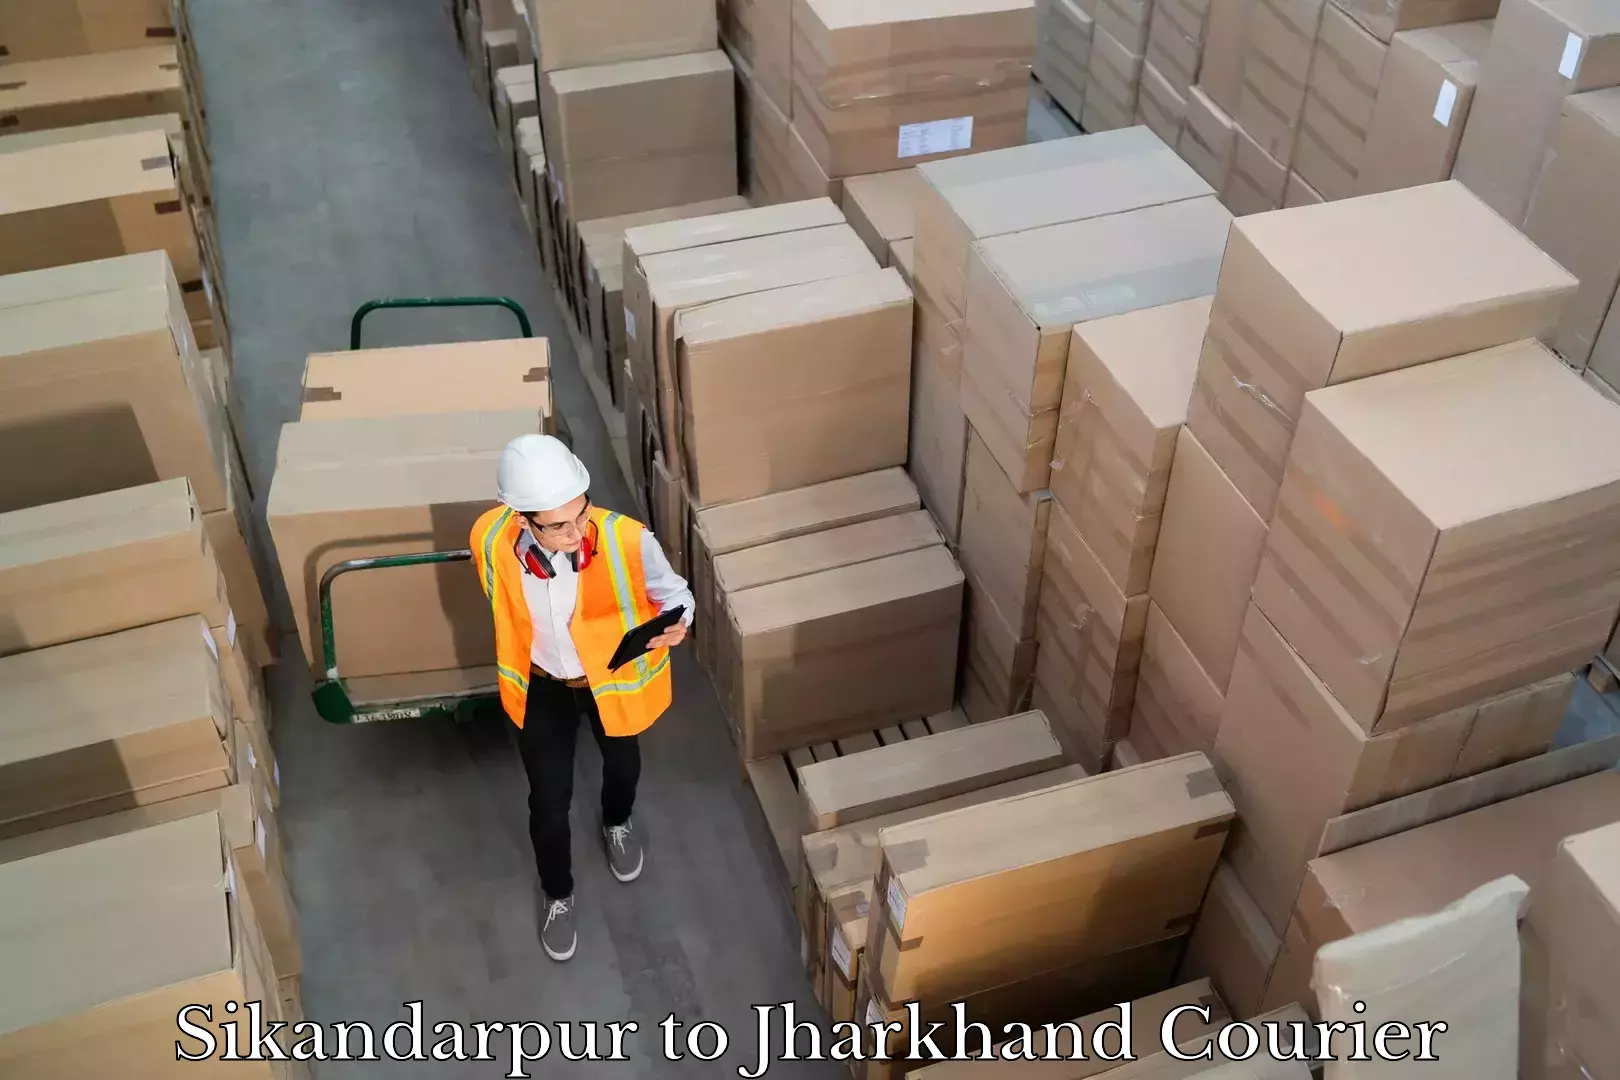 Logistics service provider Sikandarpur to Jharkhand